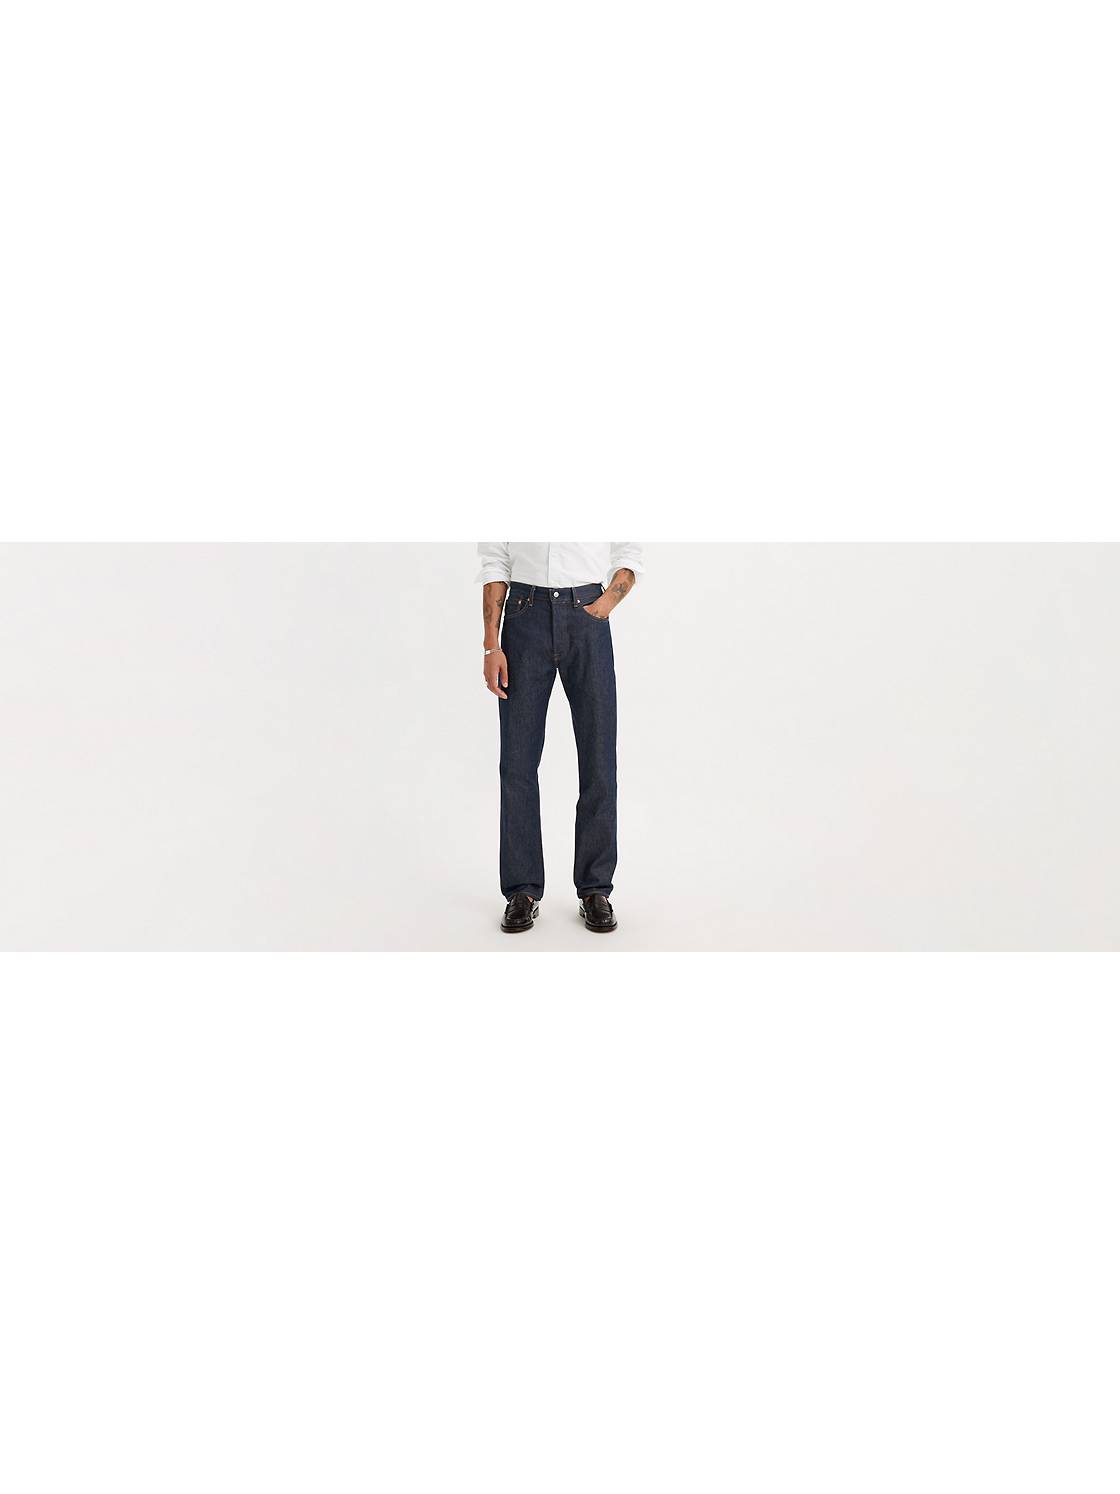 Men's Jeans: Shop Best for Men | US